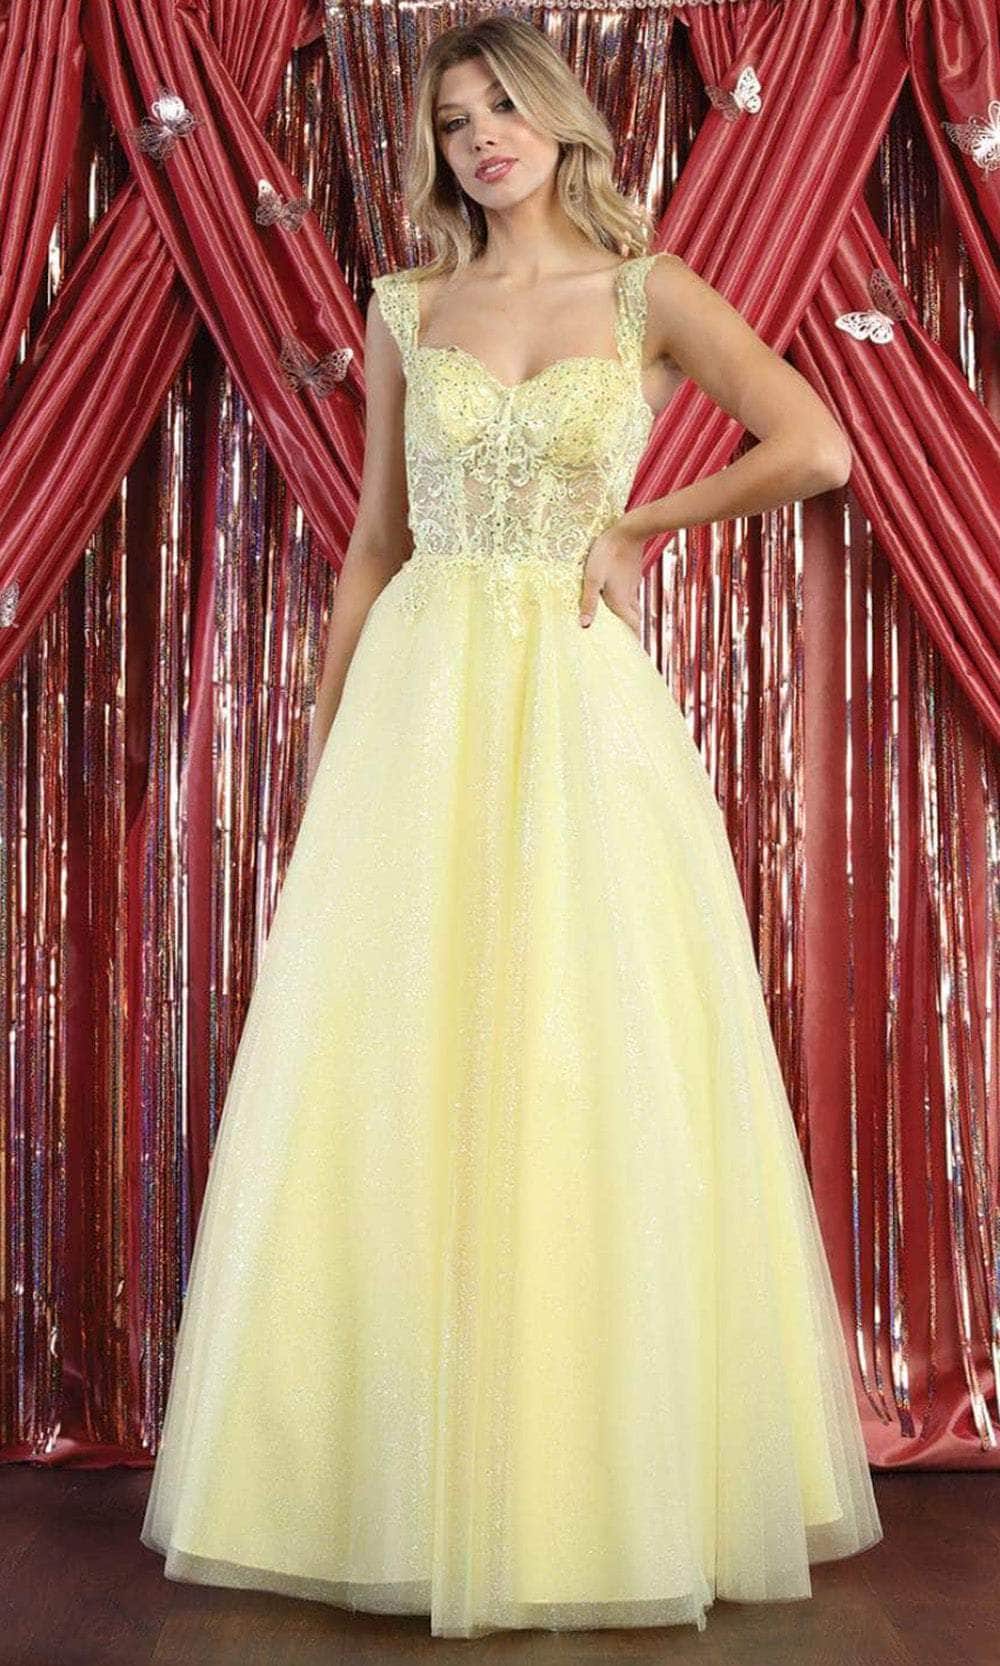 May Queen LK194 - Sweetheart Applique Ballgown
